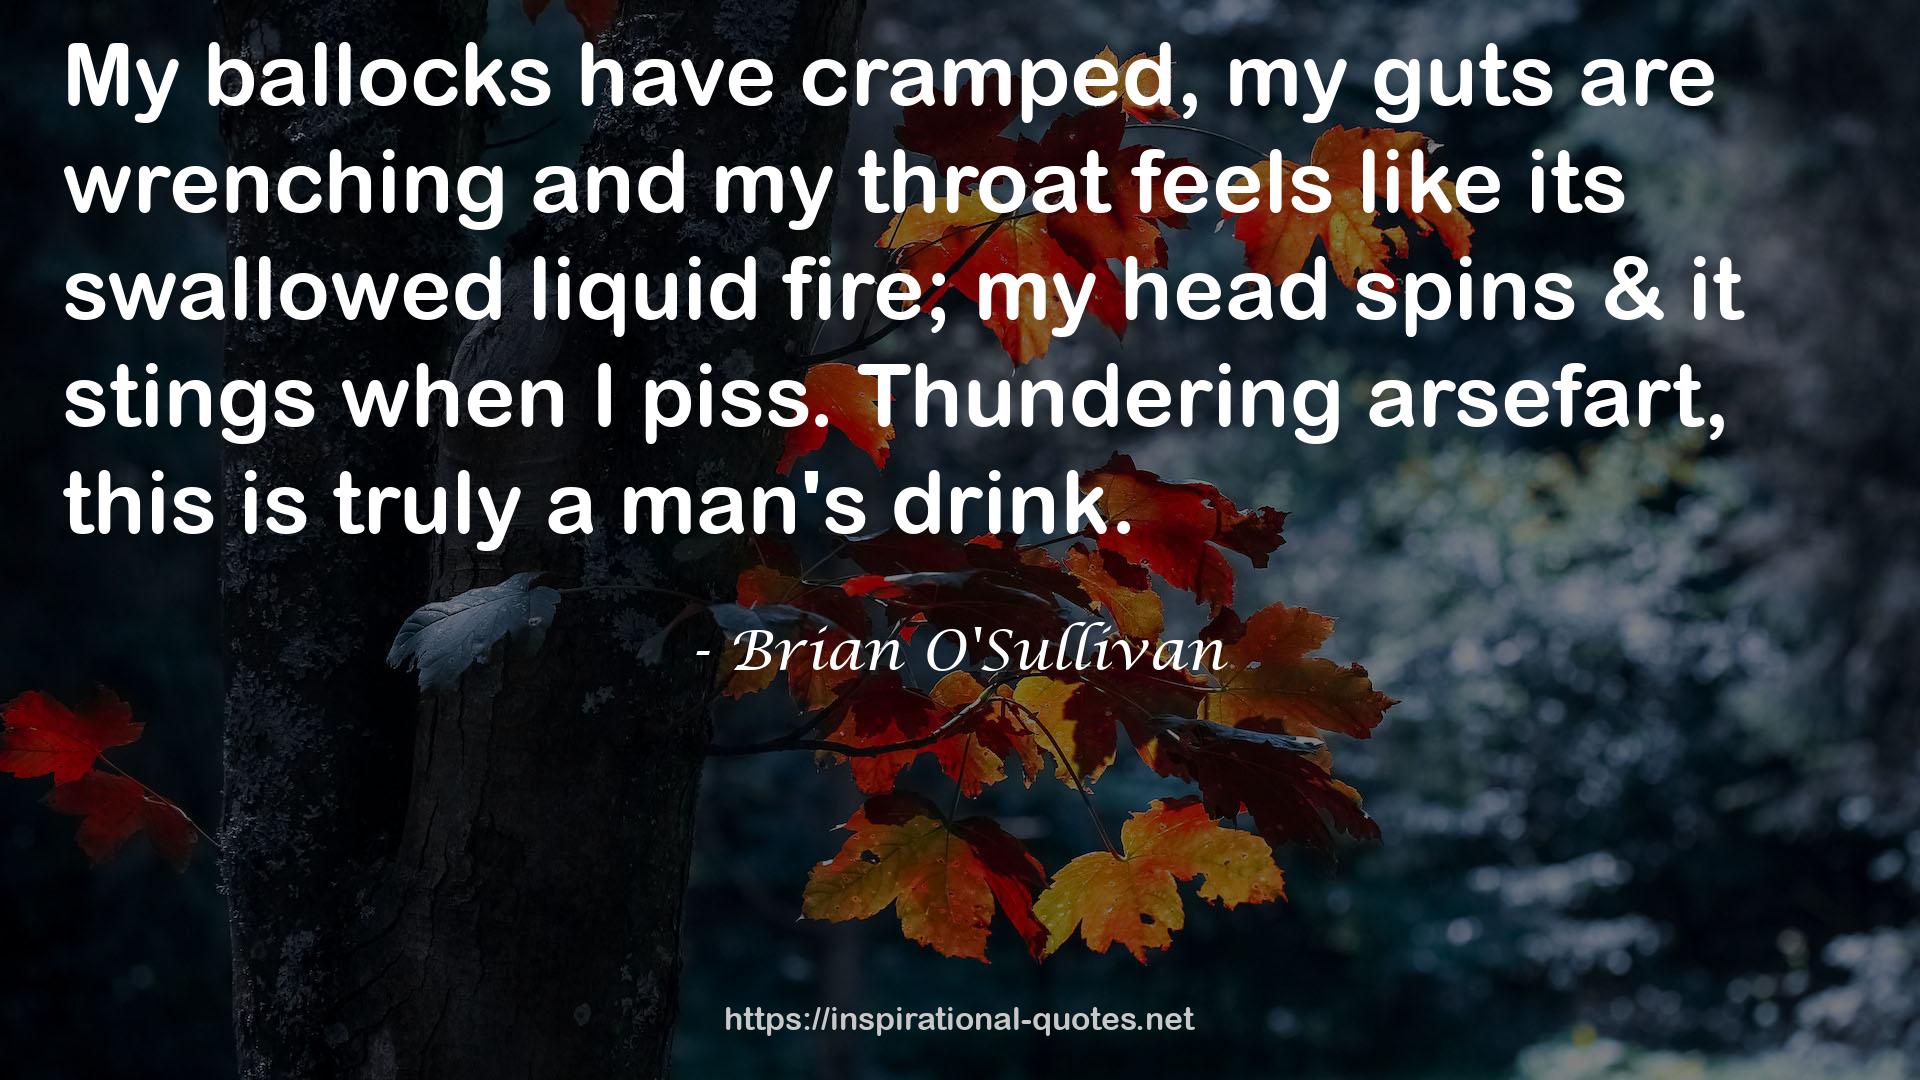 Brian O'Sullivan QUOTES